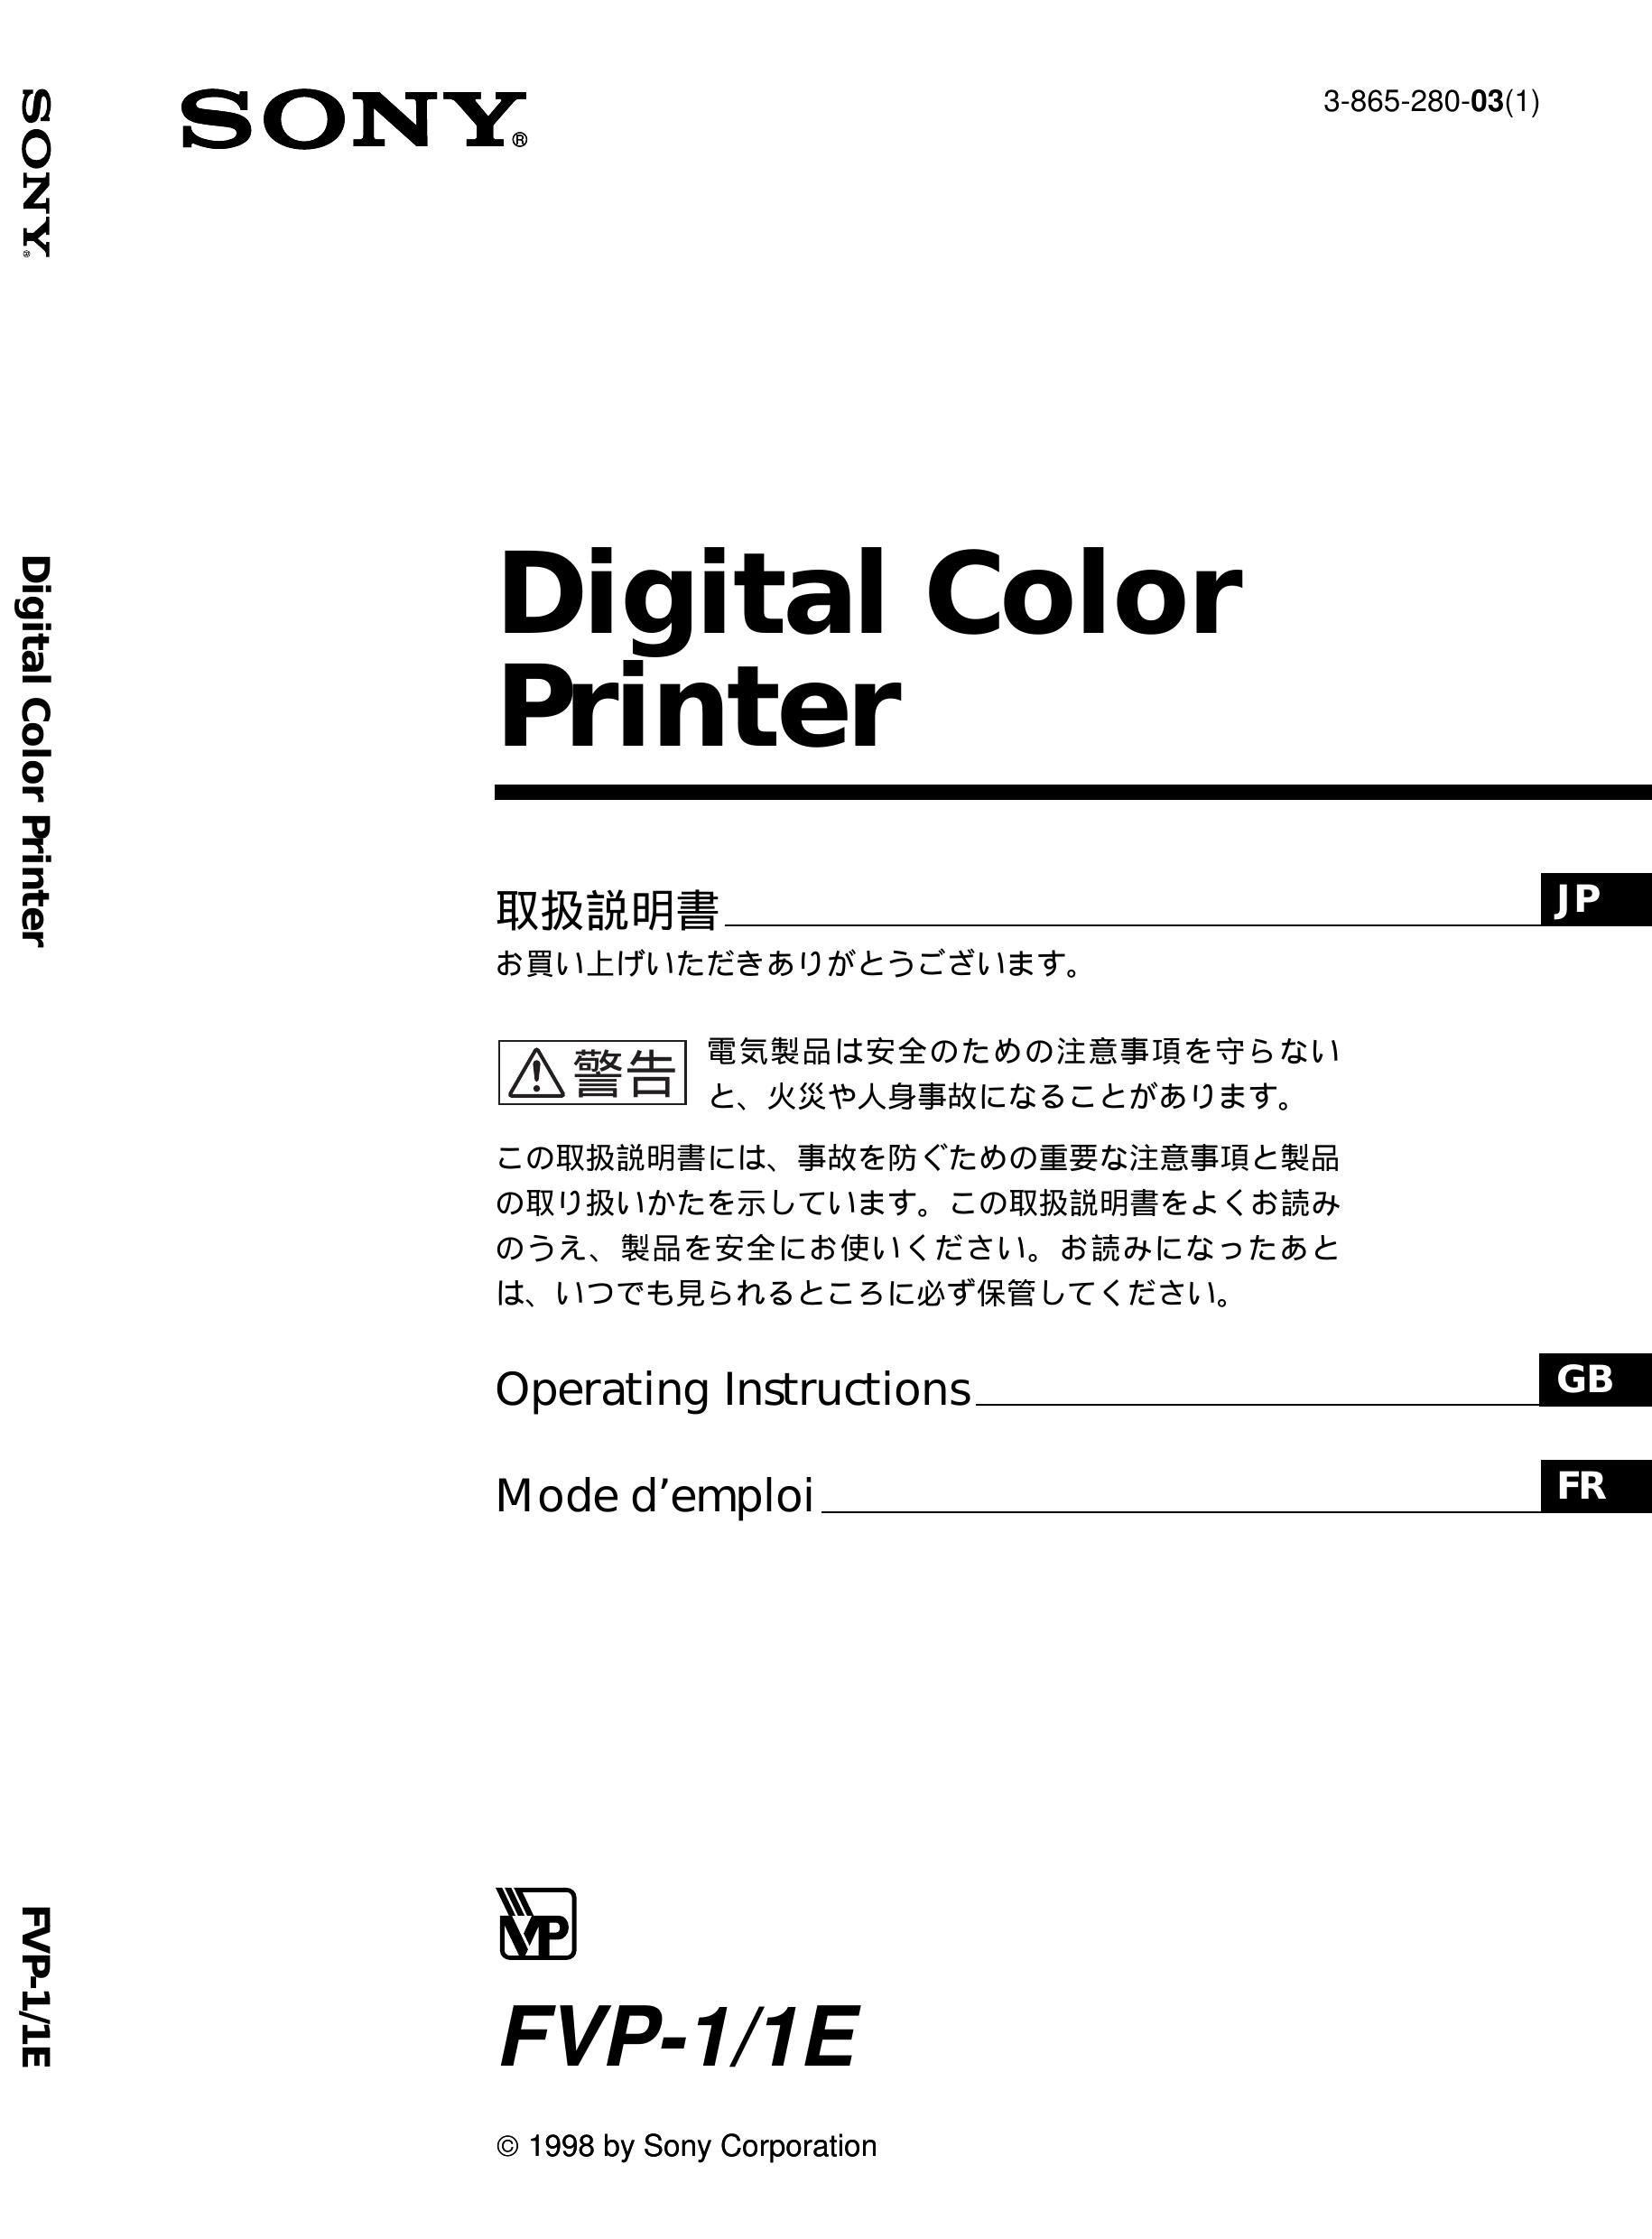 Sony FVP-1/1E Photo Printer User Manual